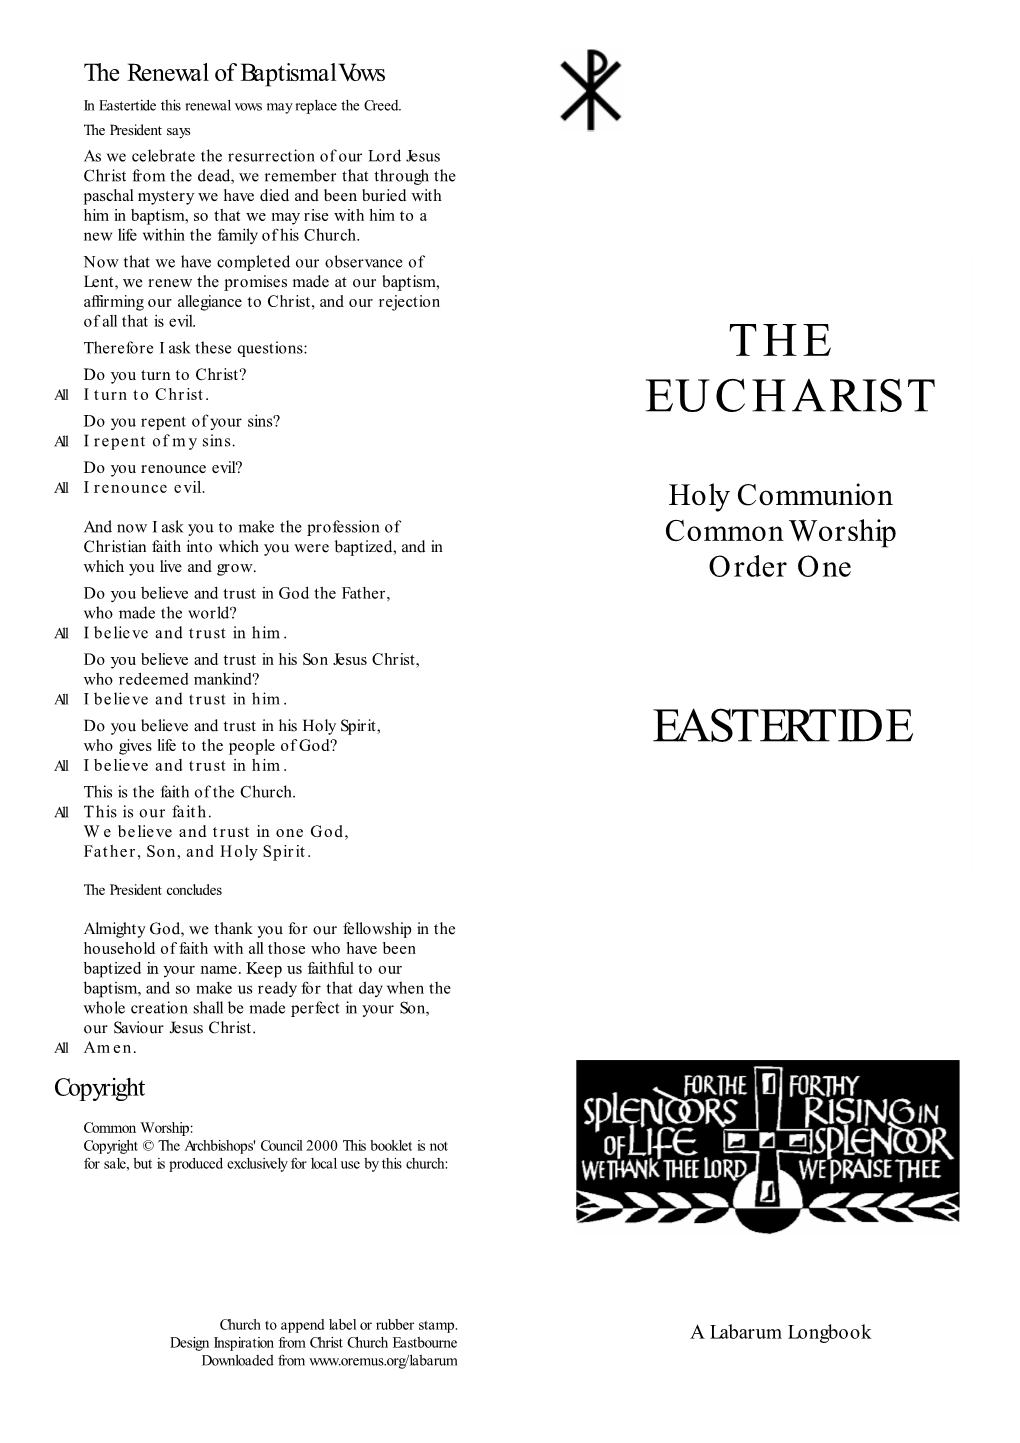 The Eucharist Eastertide